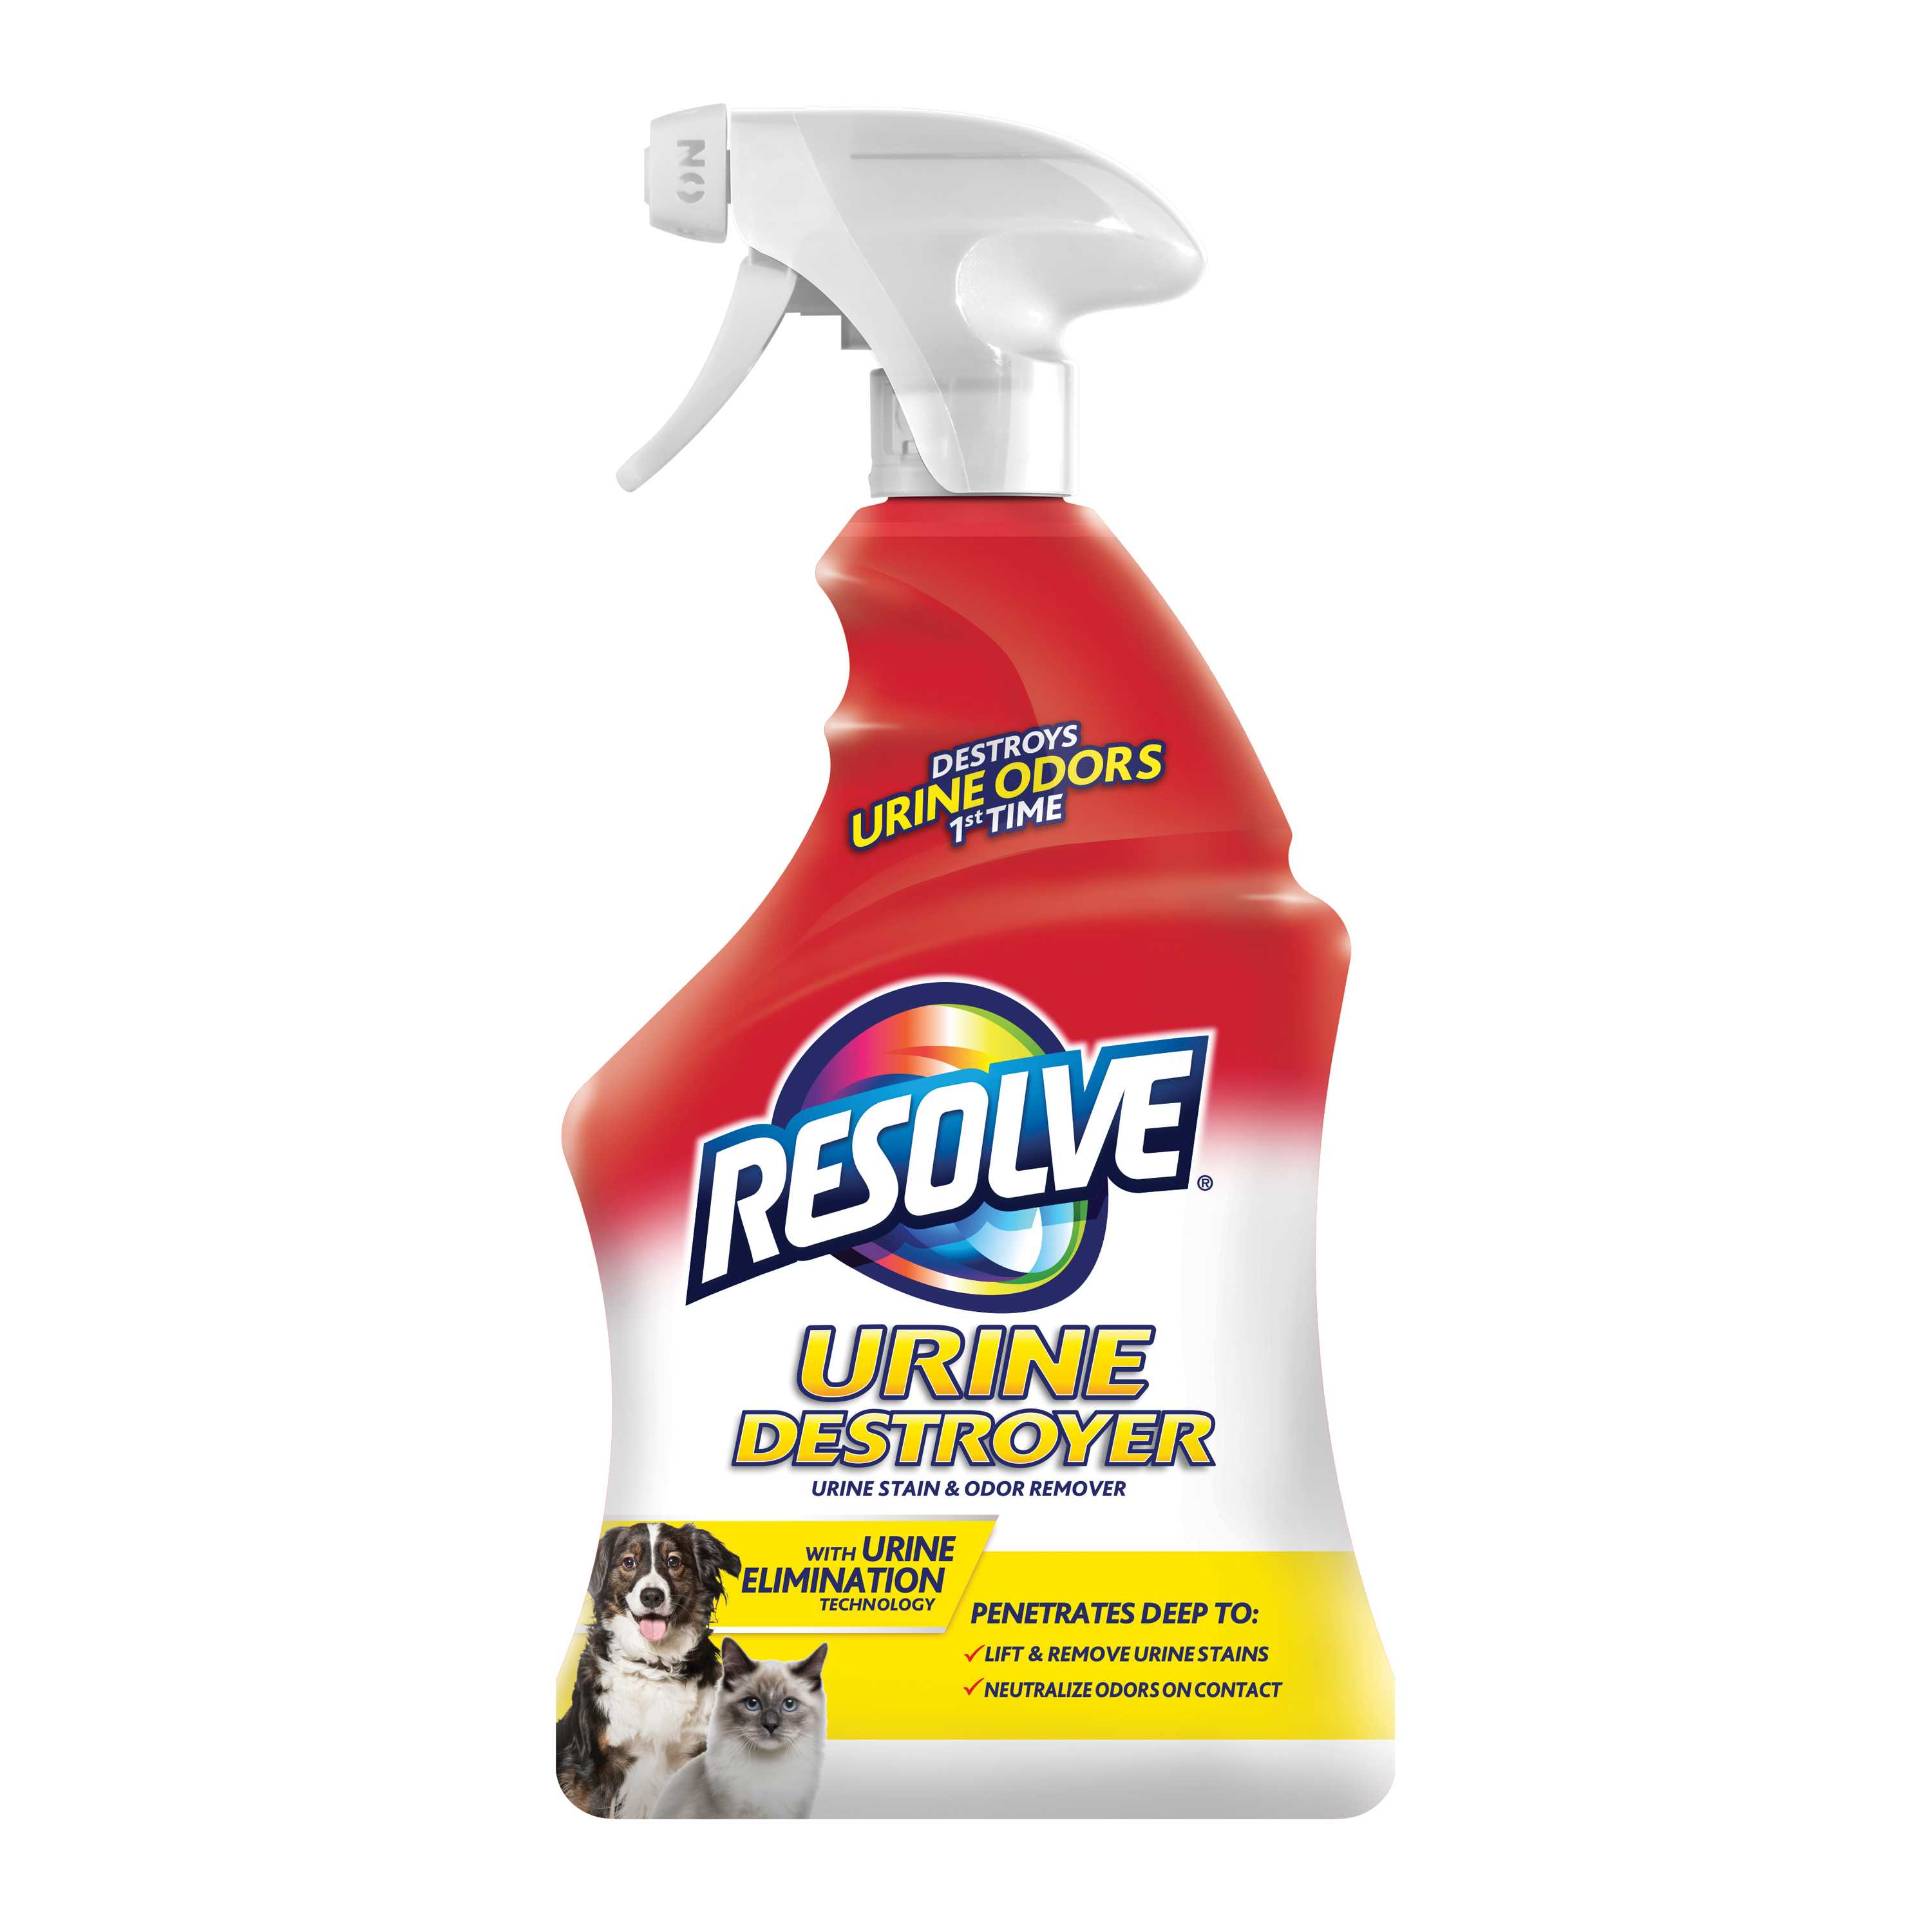 Resolve® Urine Destroyer Urine Stain & Odor Remover